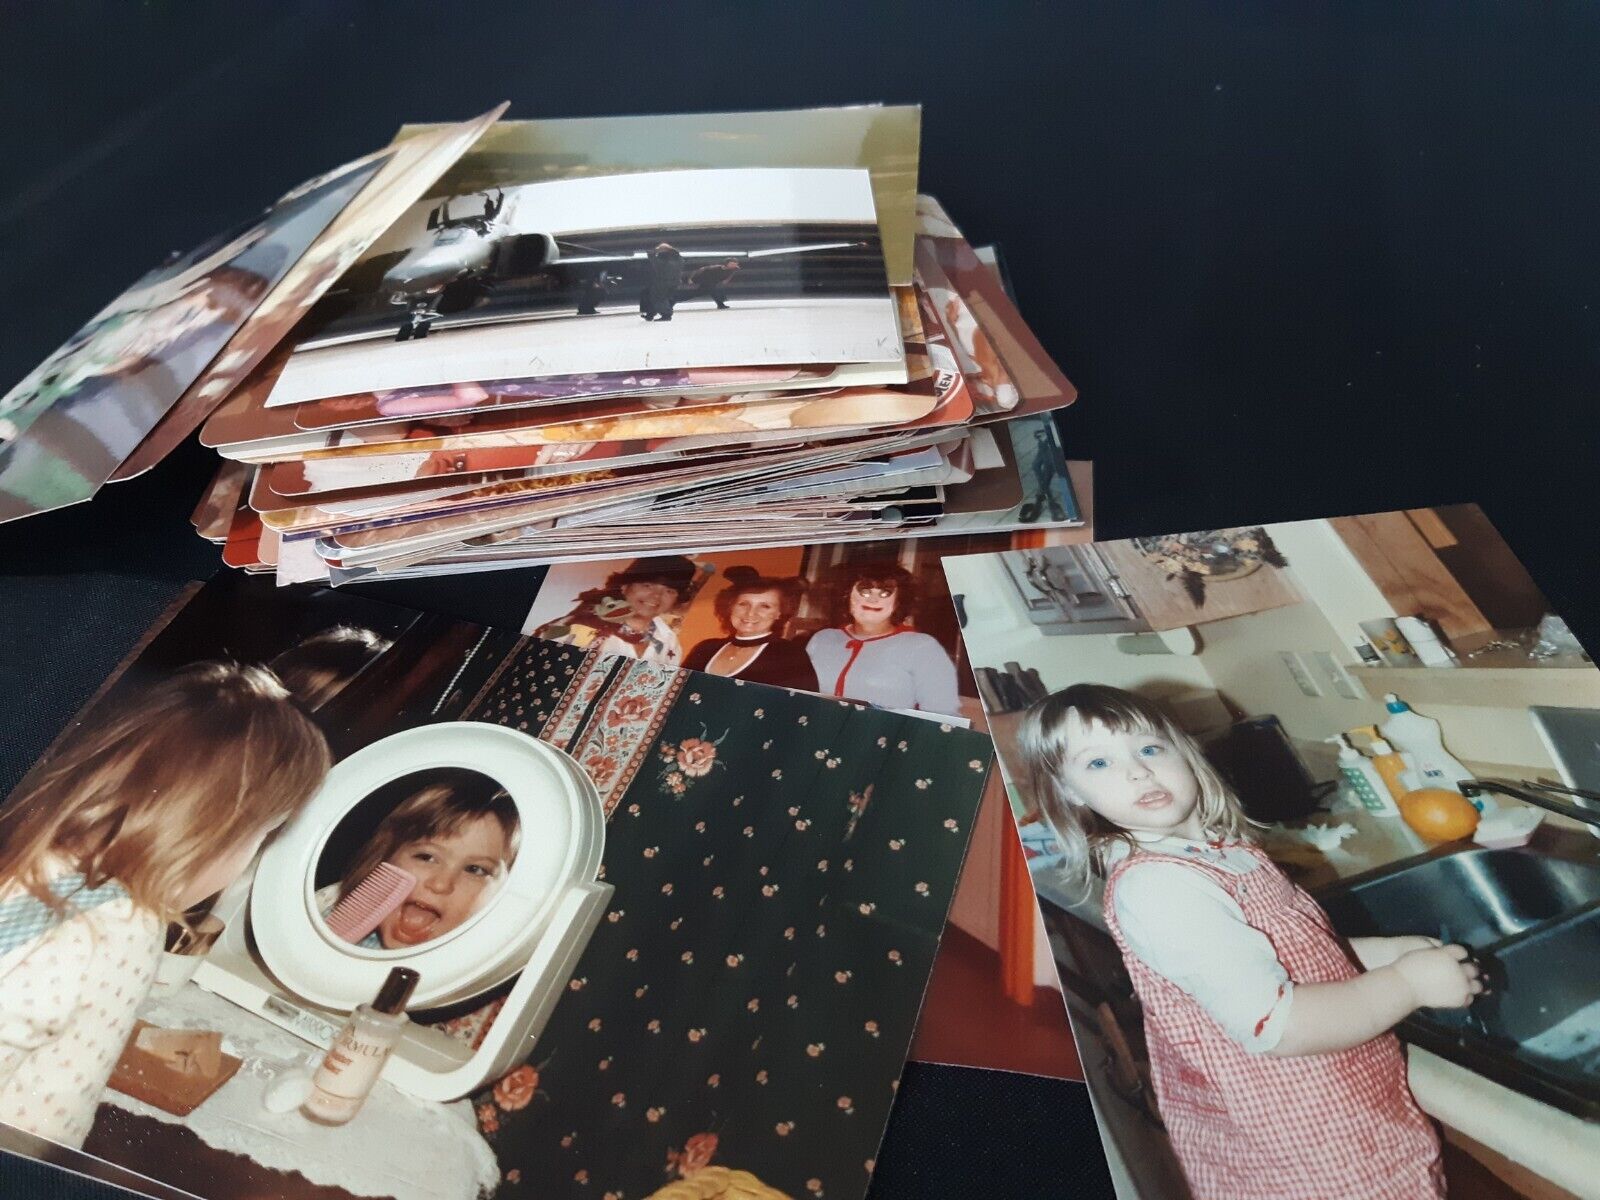 LOT OF 115+ ORIGINAL RANDOM FOUND OLD COLOR PHOTOS VINTAGE SNAPSHOTS 80s 90s